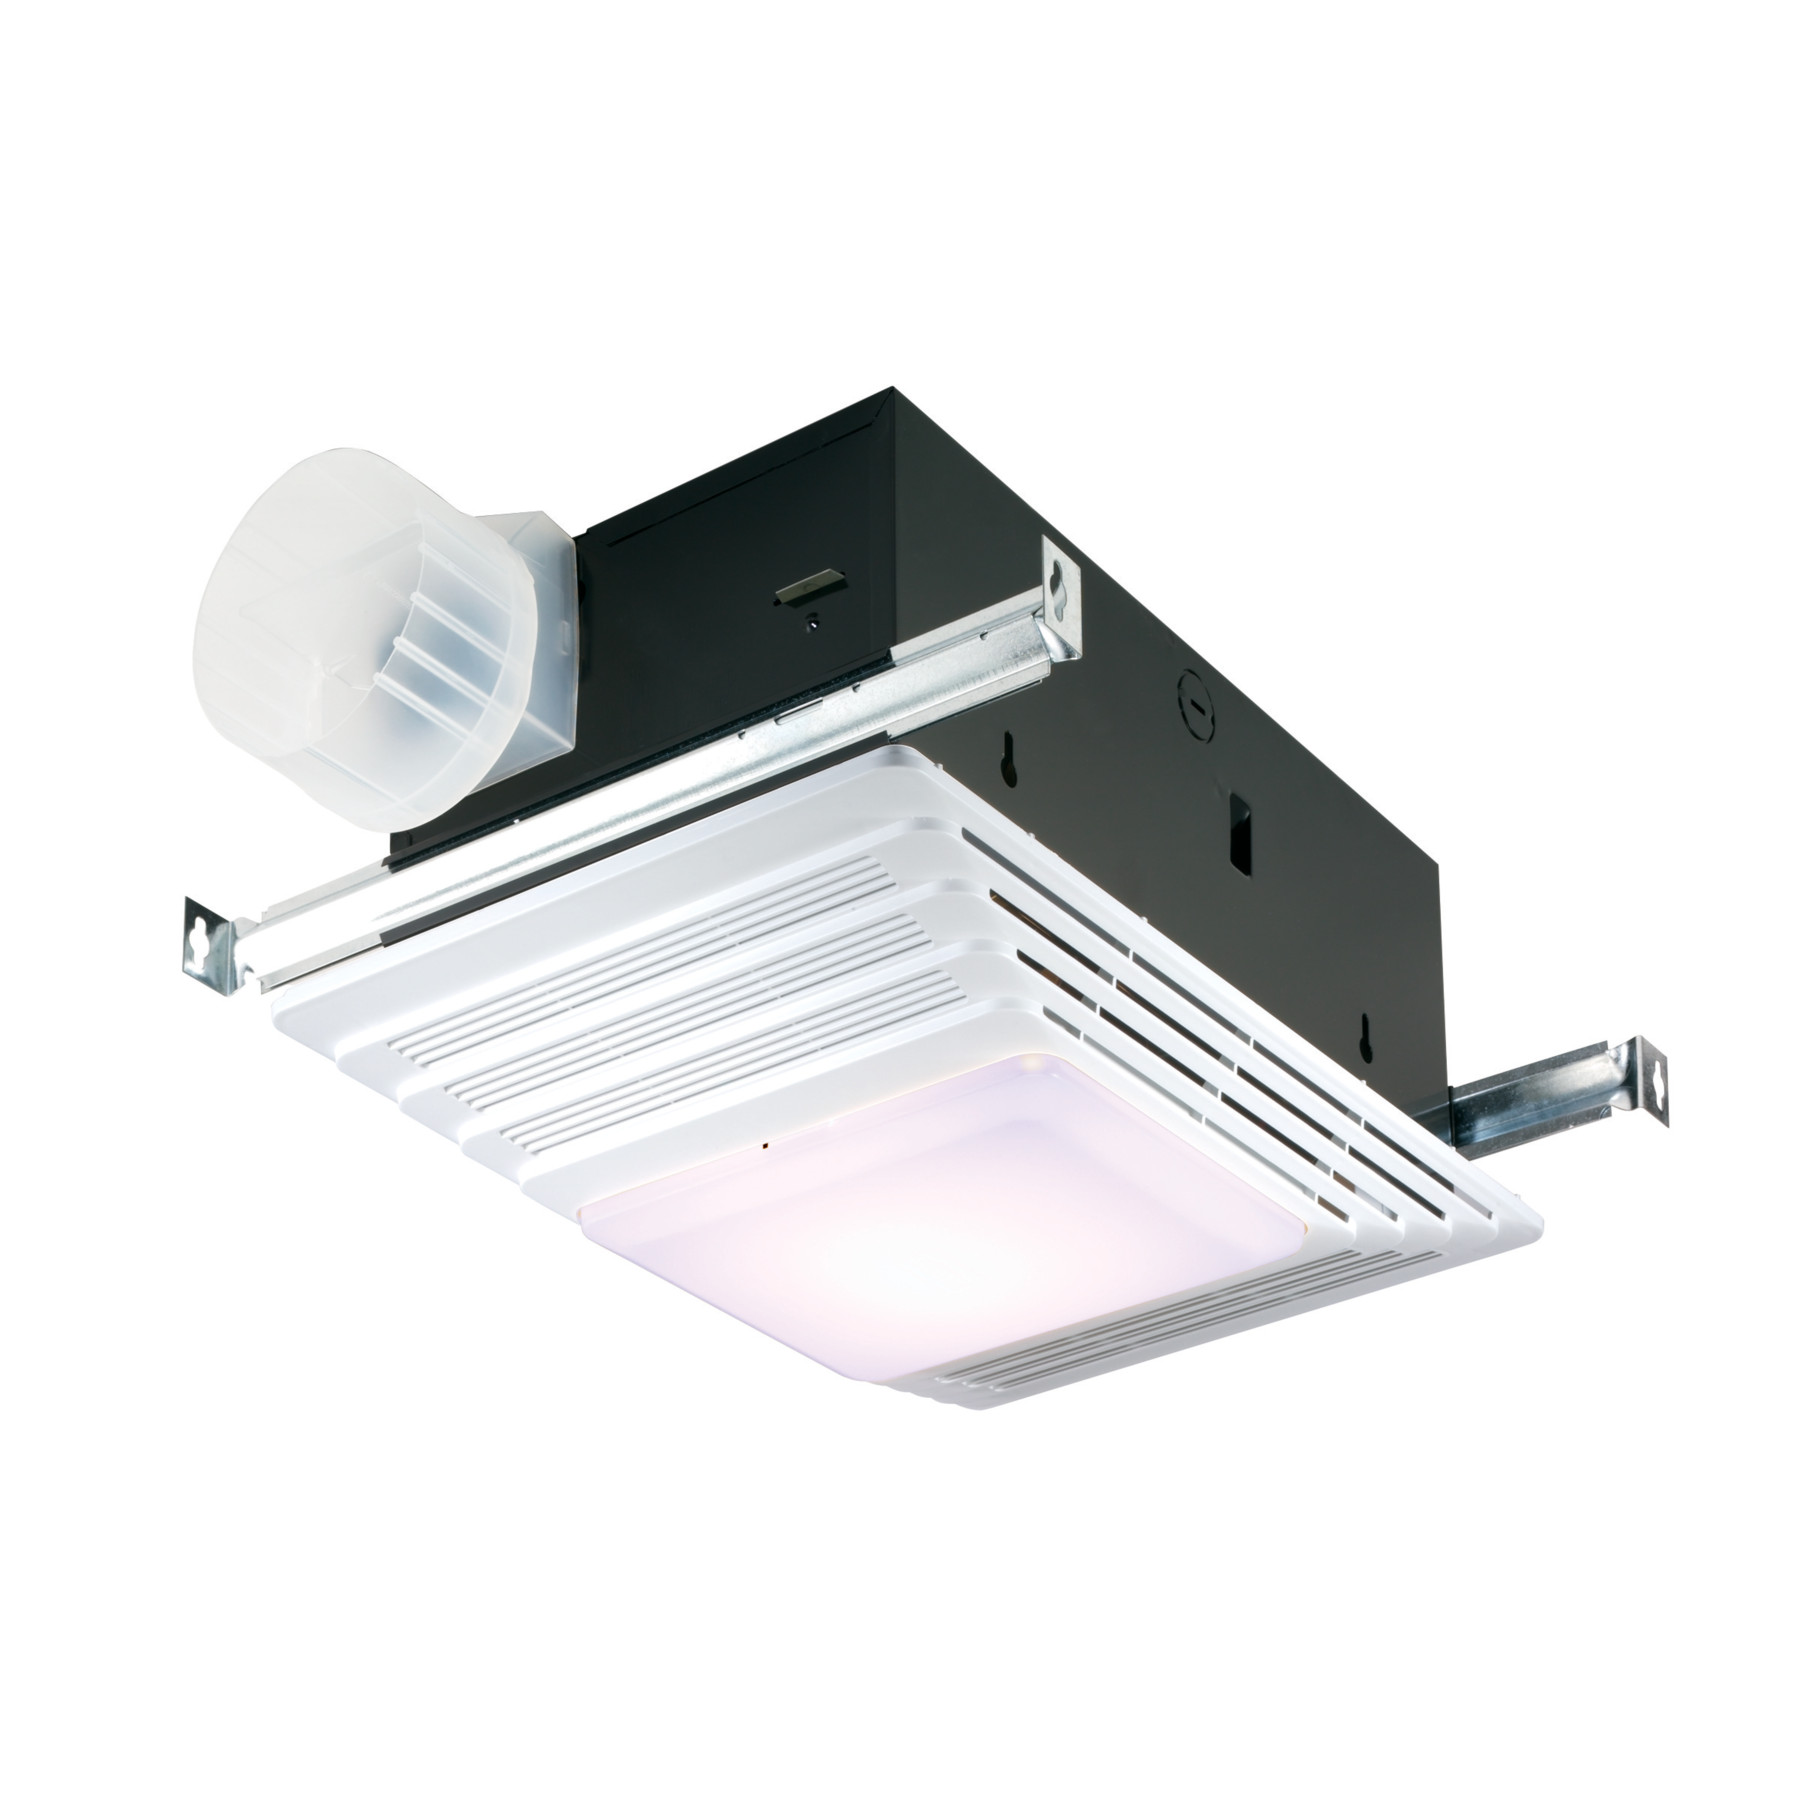 Combo Fan Light Ventilation Bathroom Ceiling Exhaust Bath Nutone LED White Broan 